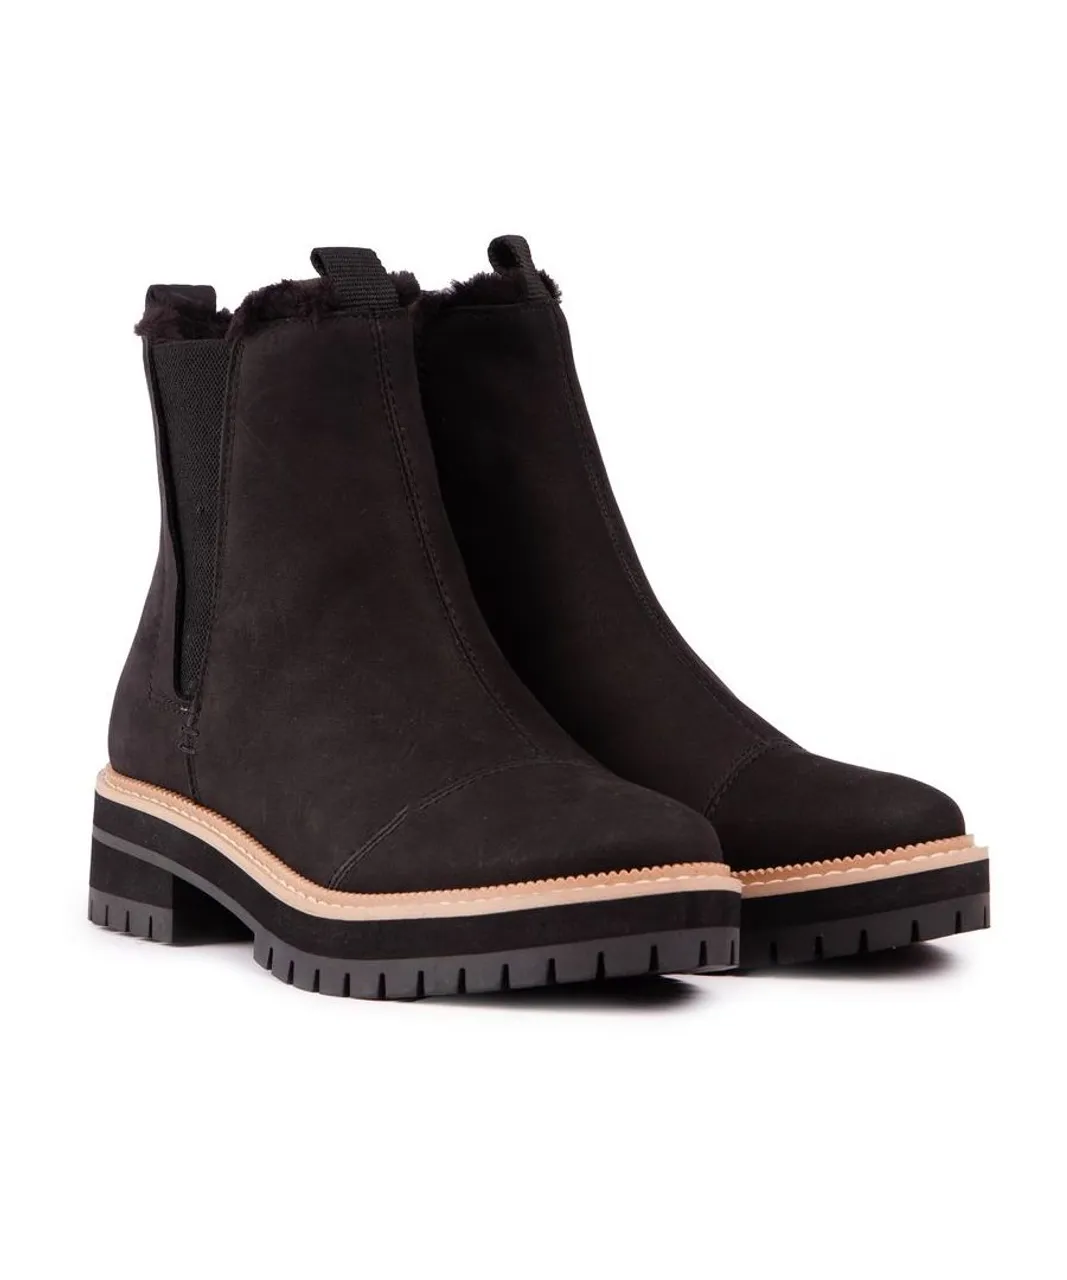 Toms Womens Dakota Boots - Black Leather